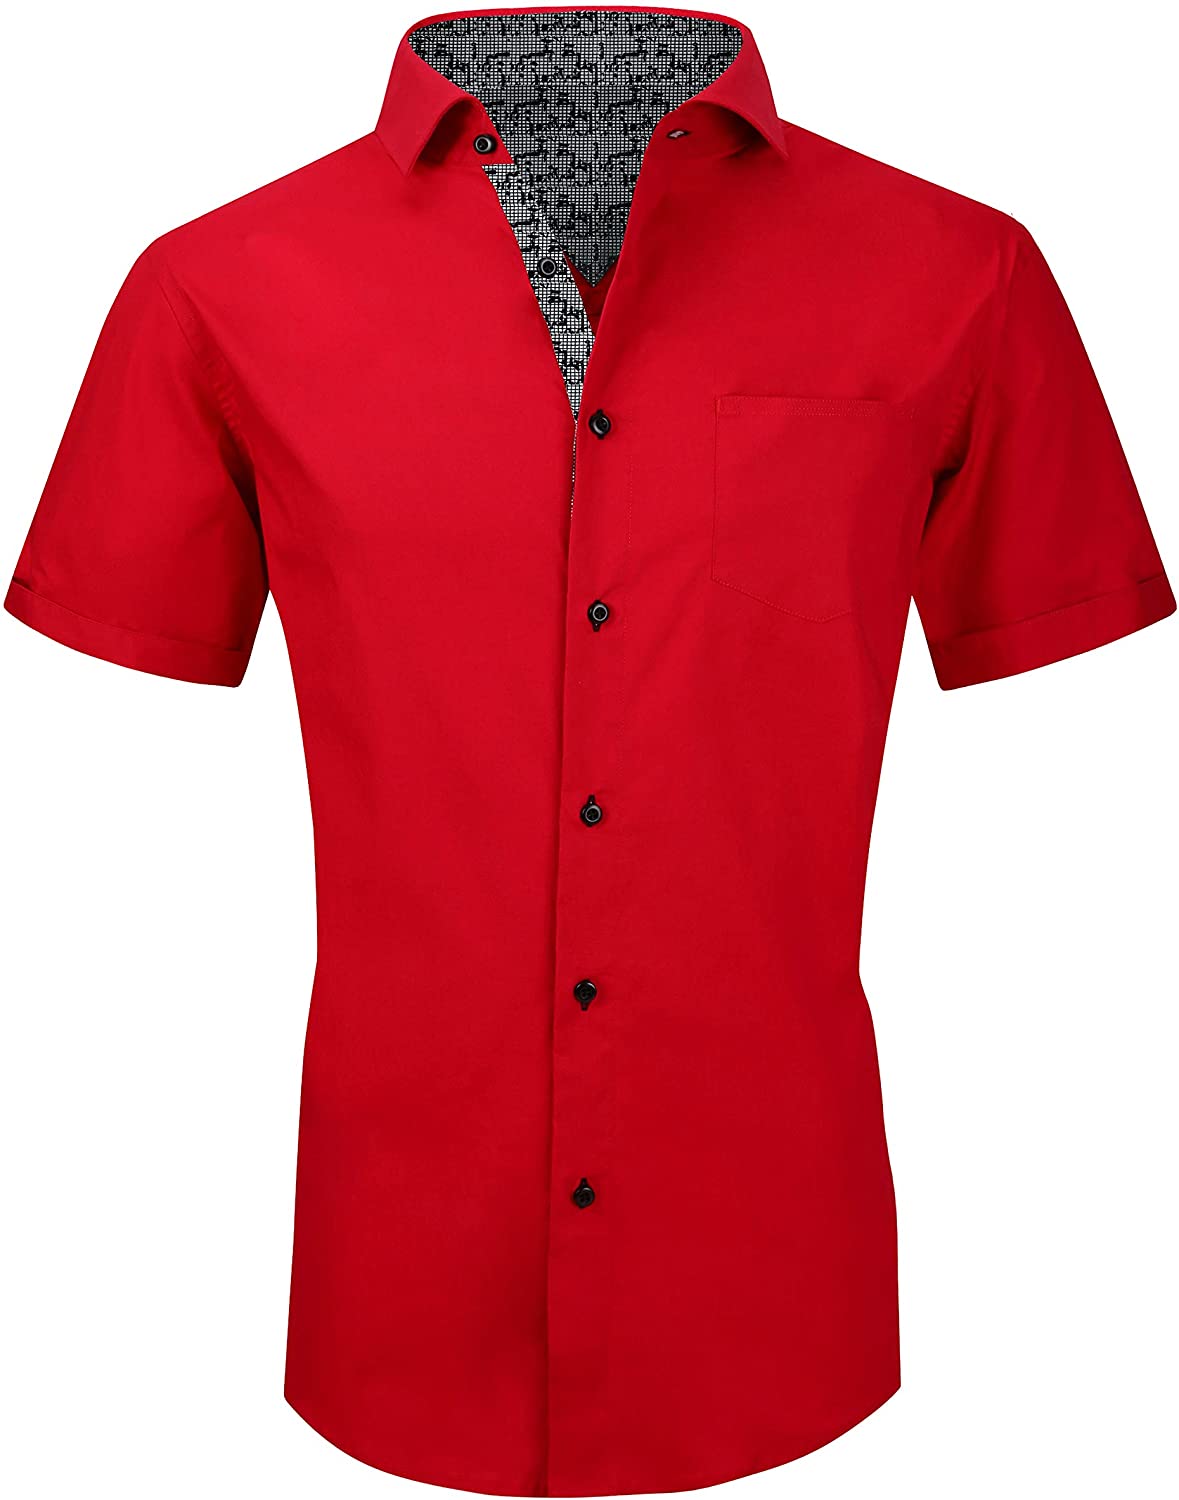 Esabel.C Men's Casual Button Down Shirts Long Sleeve Regular Fit Print Dress Shirts 